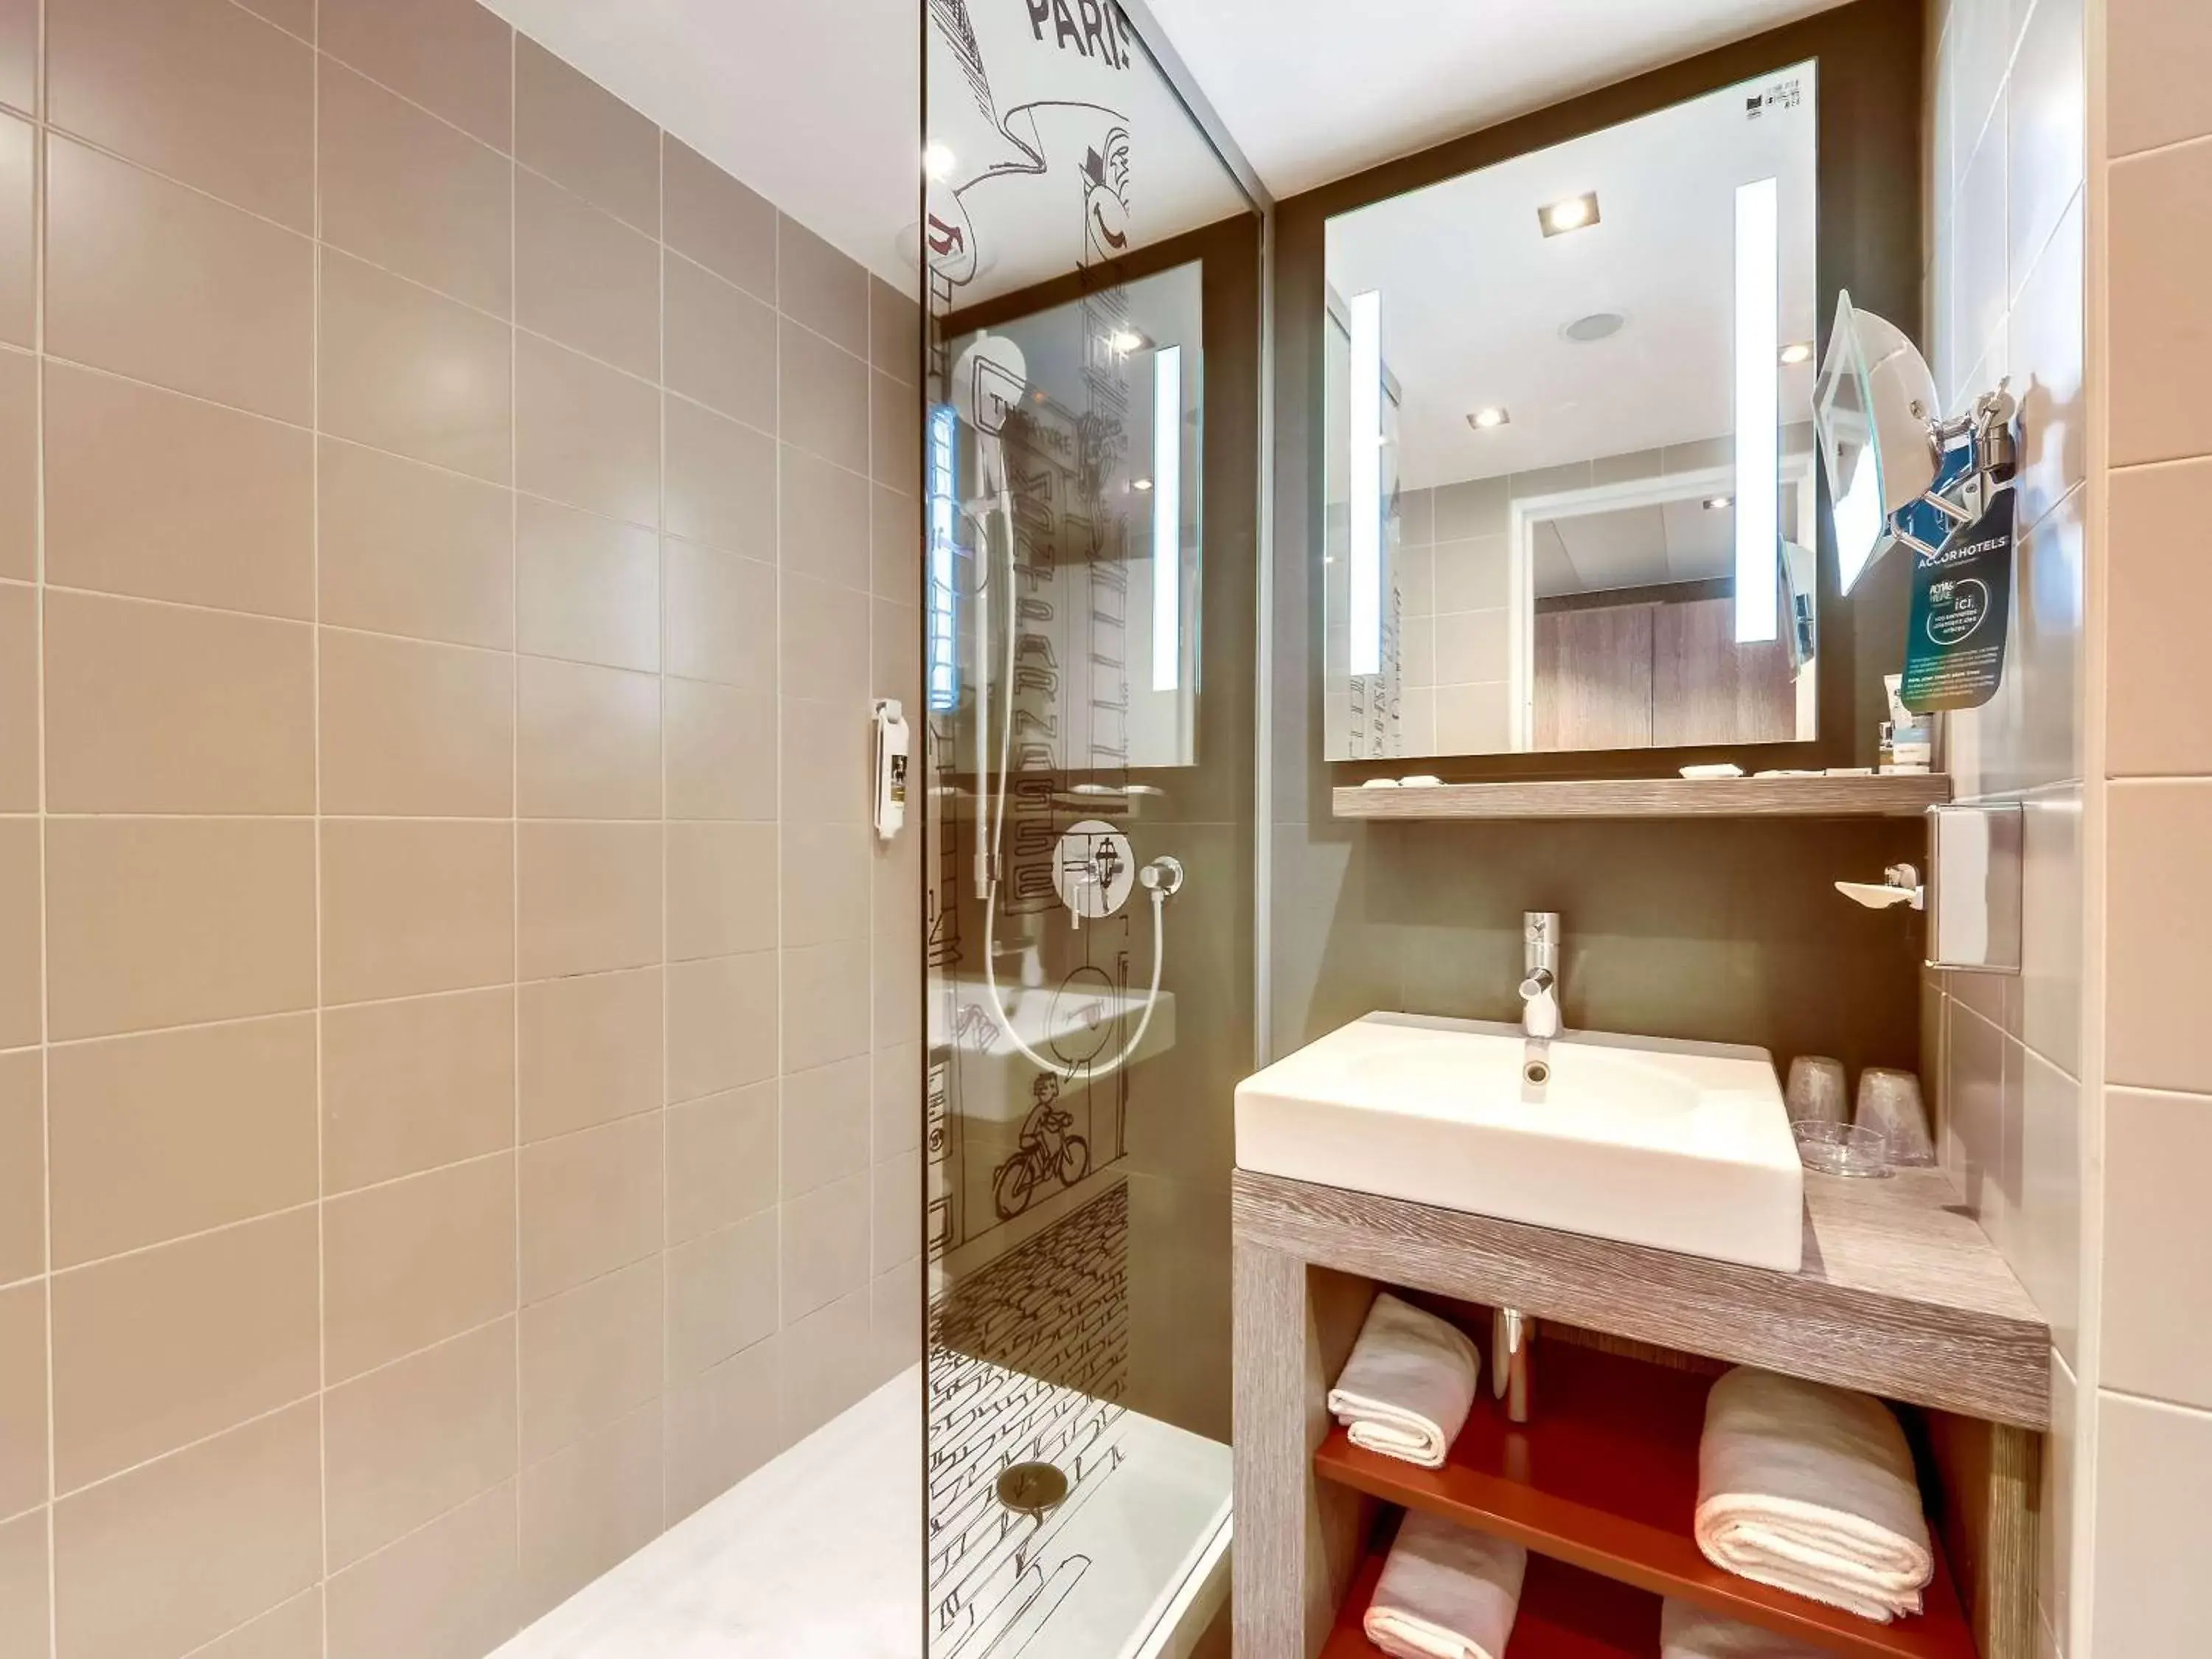 Photo of the whole room, Bathroom in Mercure Paris Gare Montparnasse